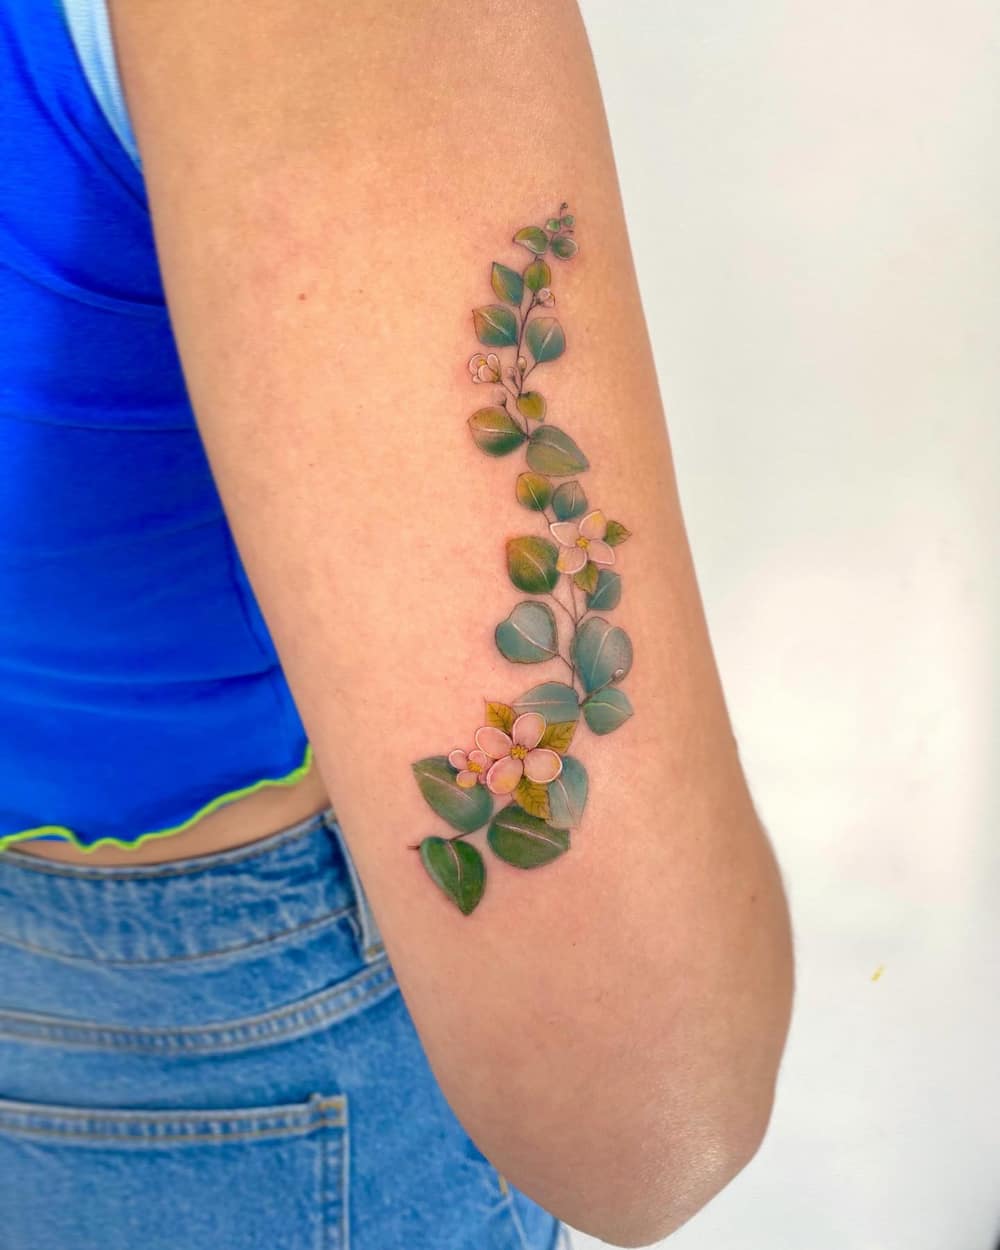 Tattoo of Eucalyptus leaves and Jasmine flowers on a woman's arm.